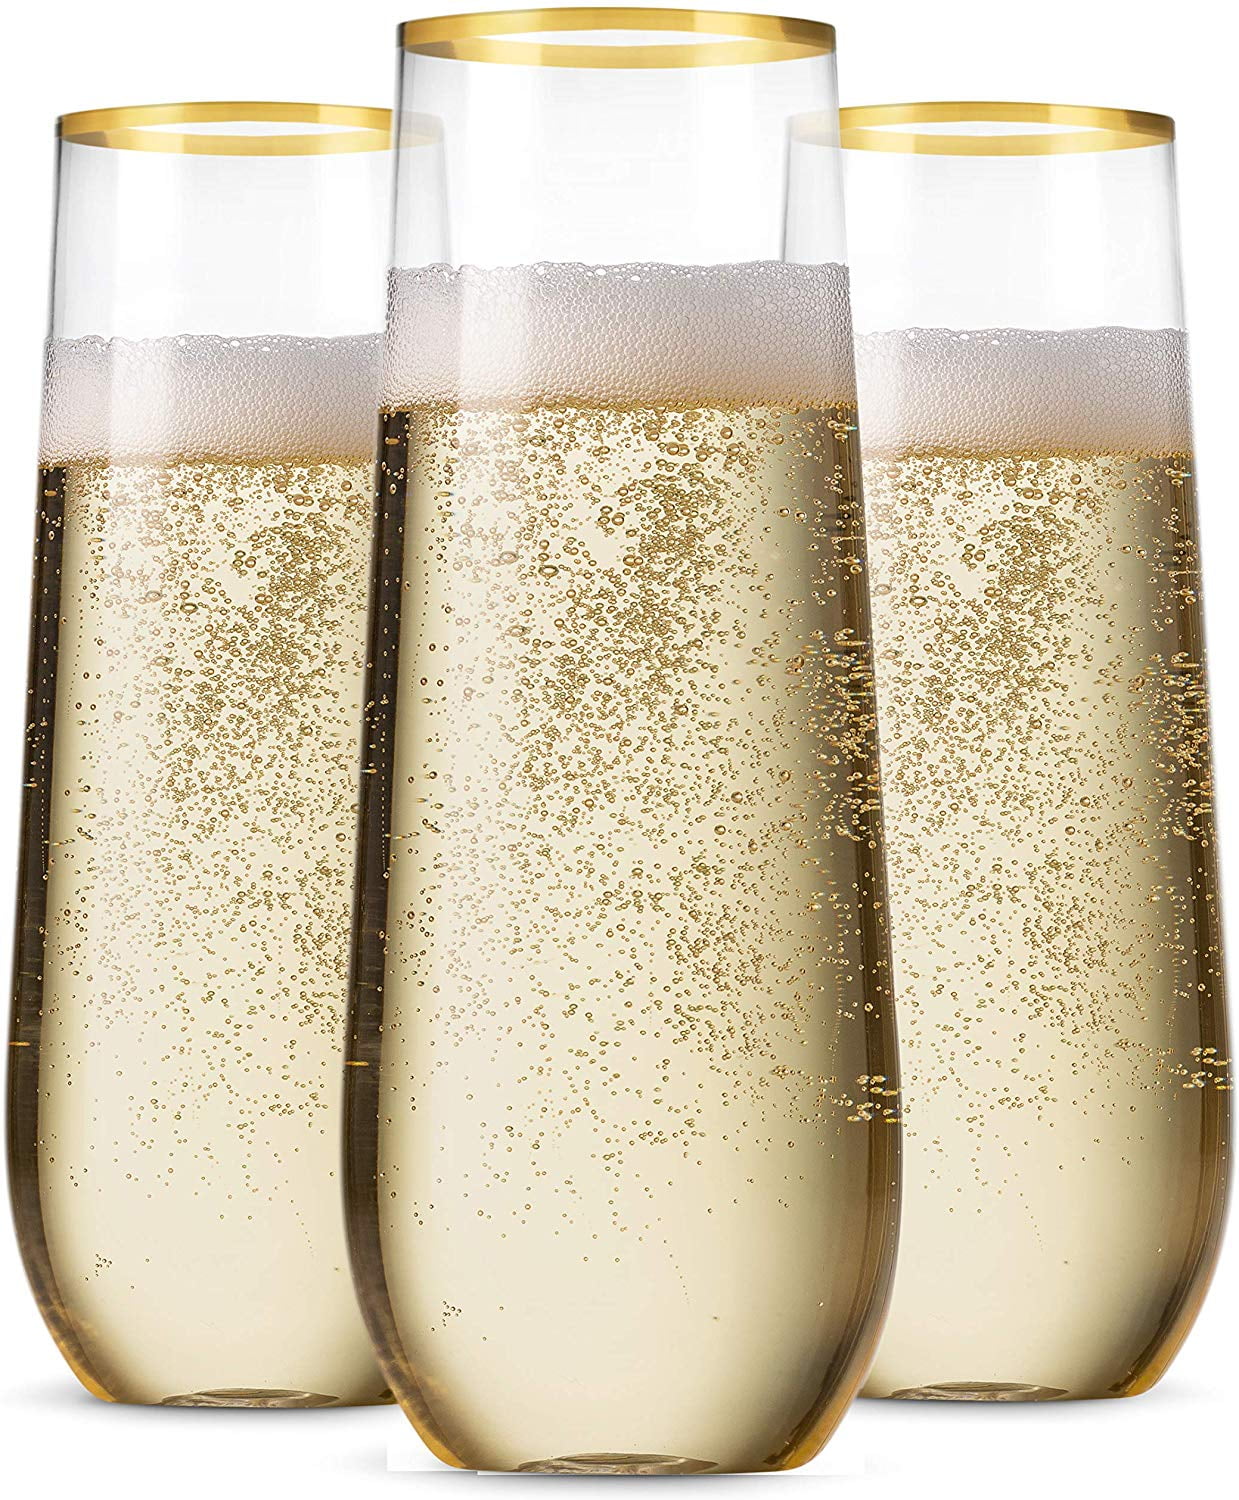 Plastic Champagne Flutes - 48 Pcs Disposable Fancy Crystal Cut Clear  Champagne Glasses - 8 oz Unbrea…See more Plastic Champagne Flutes - 48 Pcs